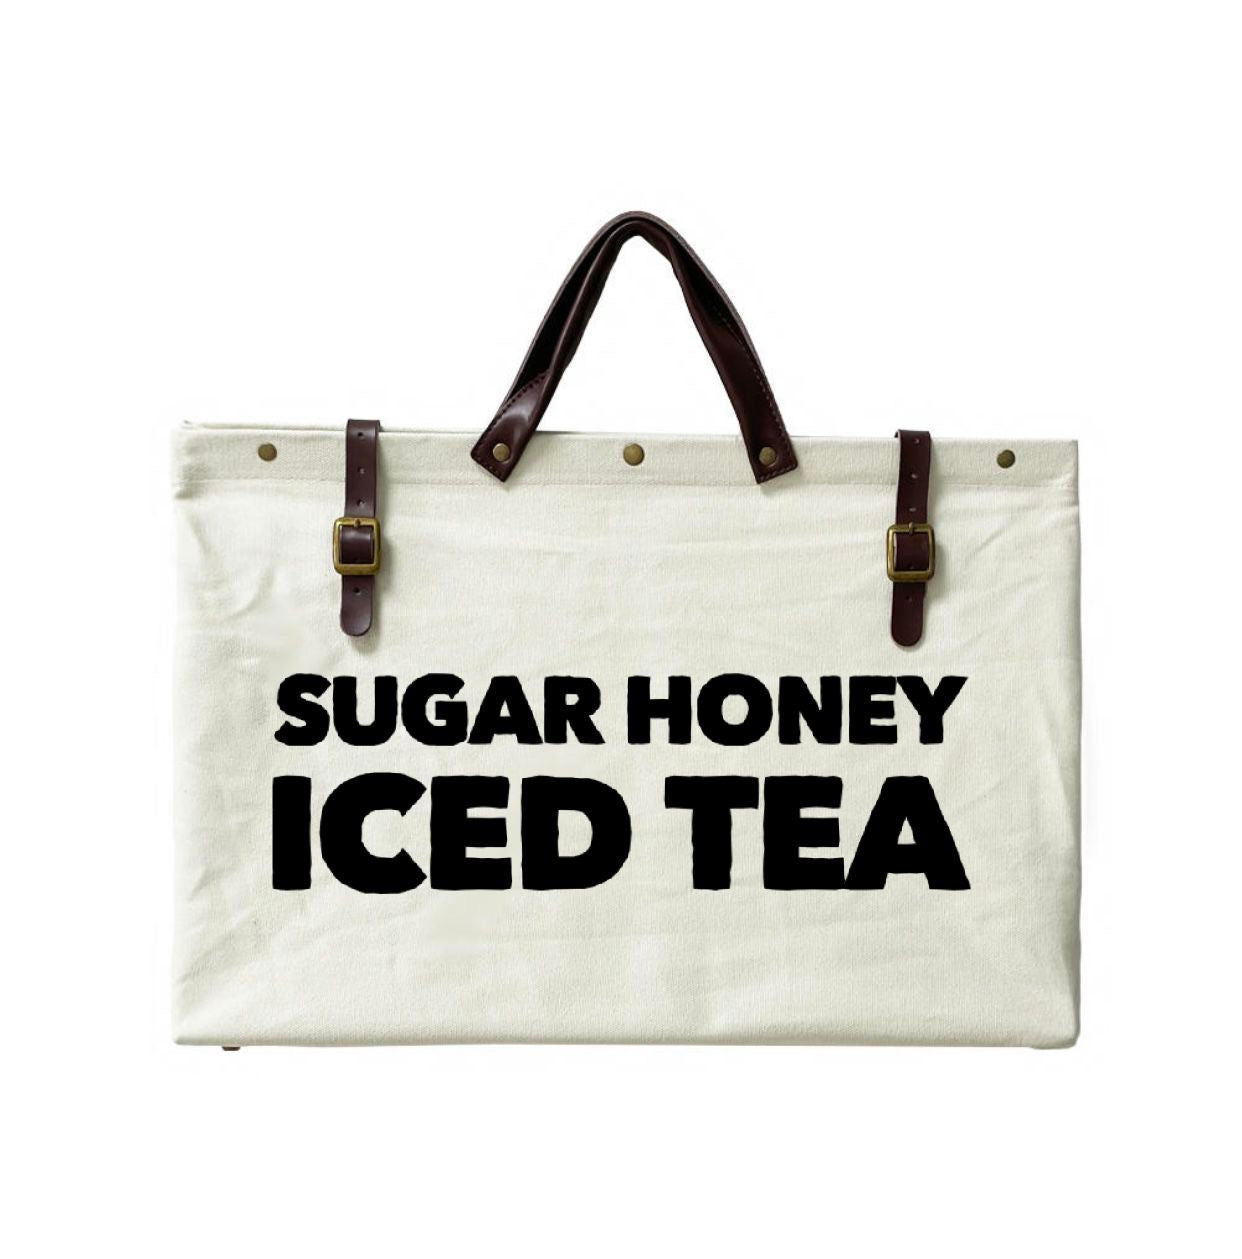 “Sugar Honey Iced Tea” Travel Tote